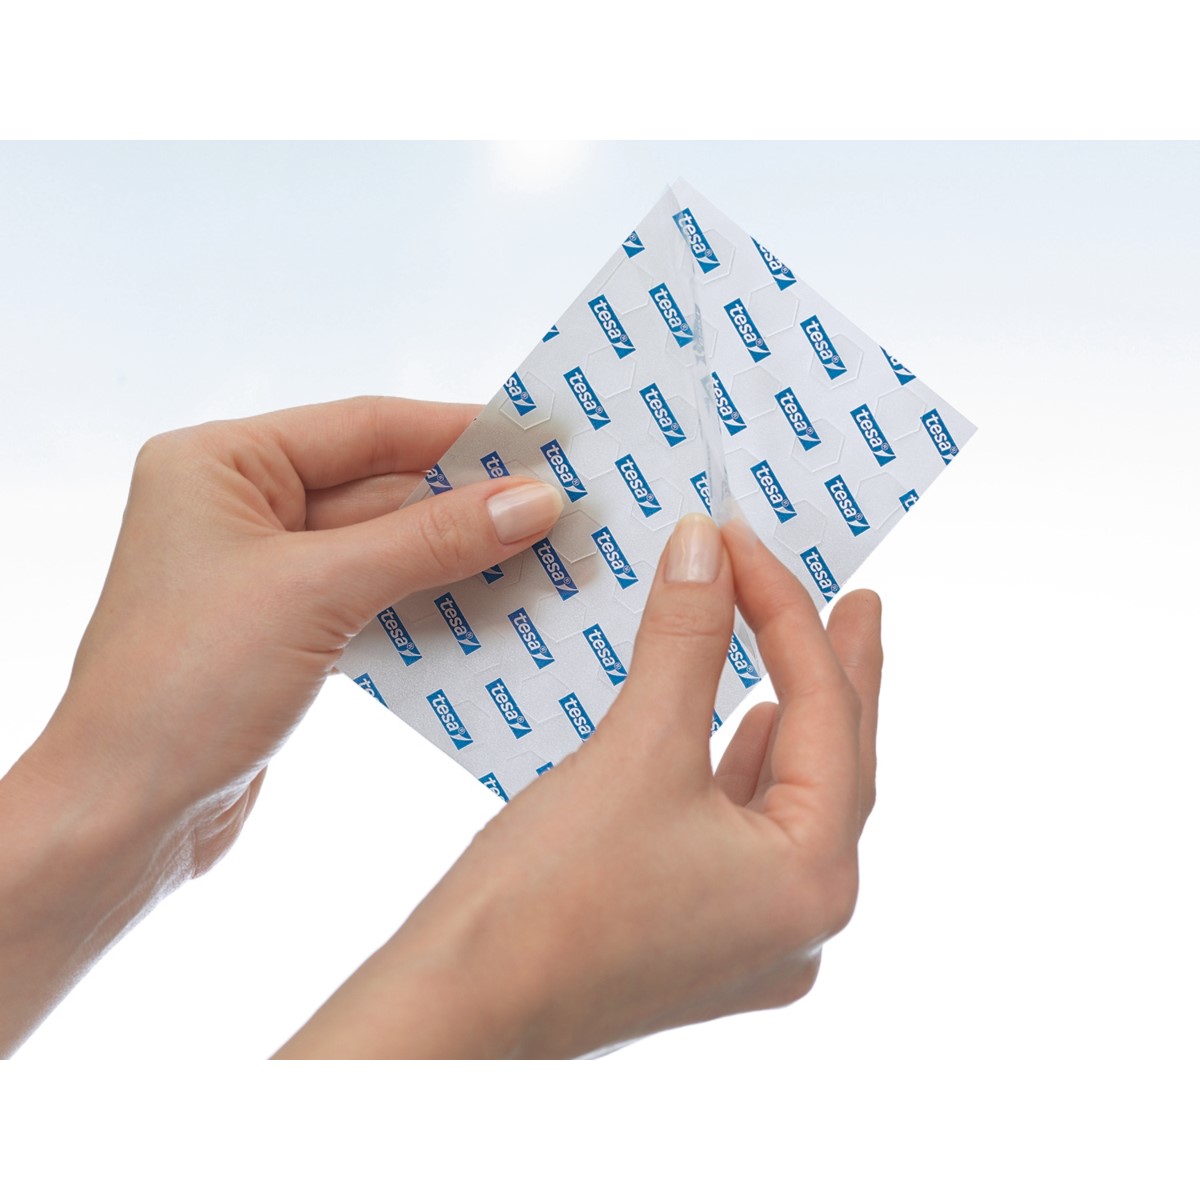 Tesa Tack Doppelseitige Klebepads Transparent 60 Stück kaufen bei OBI